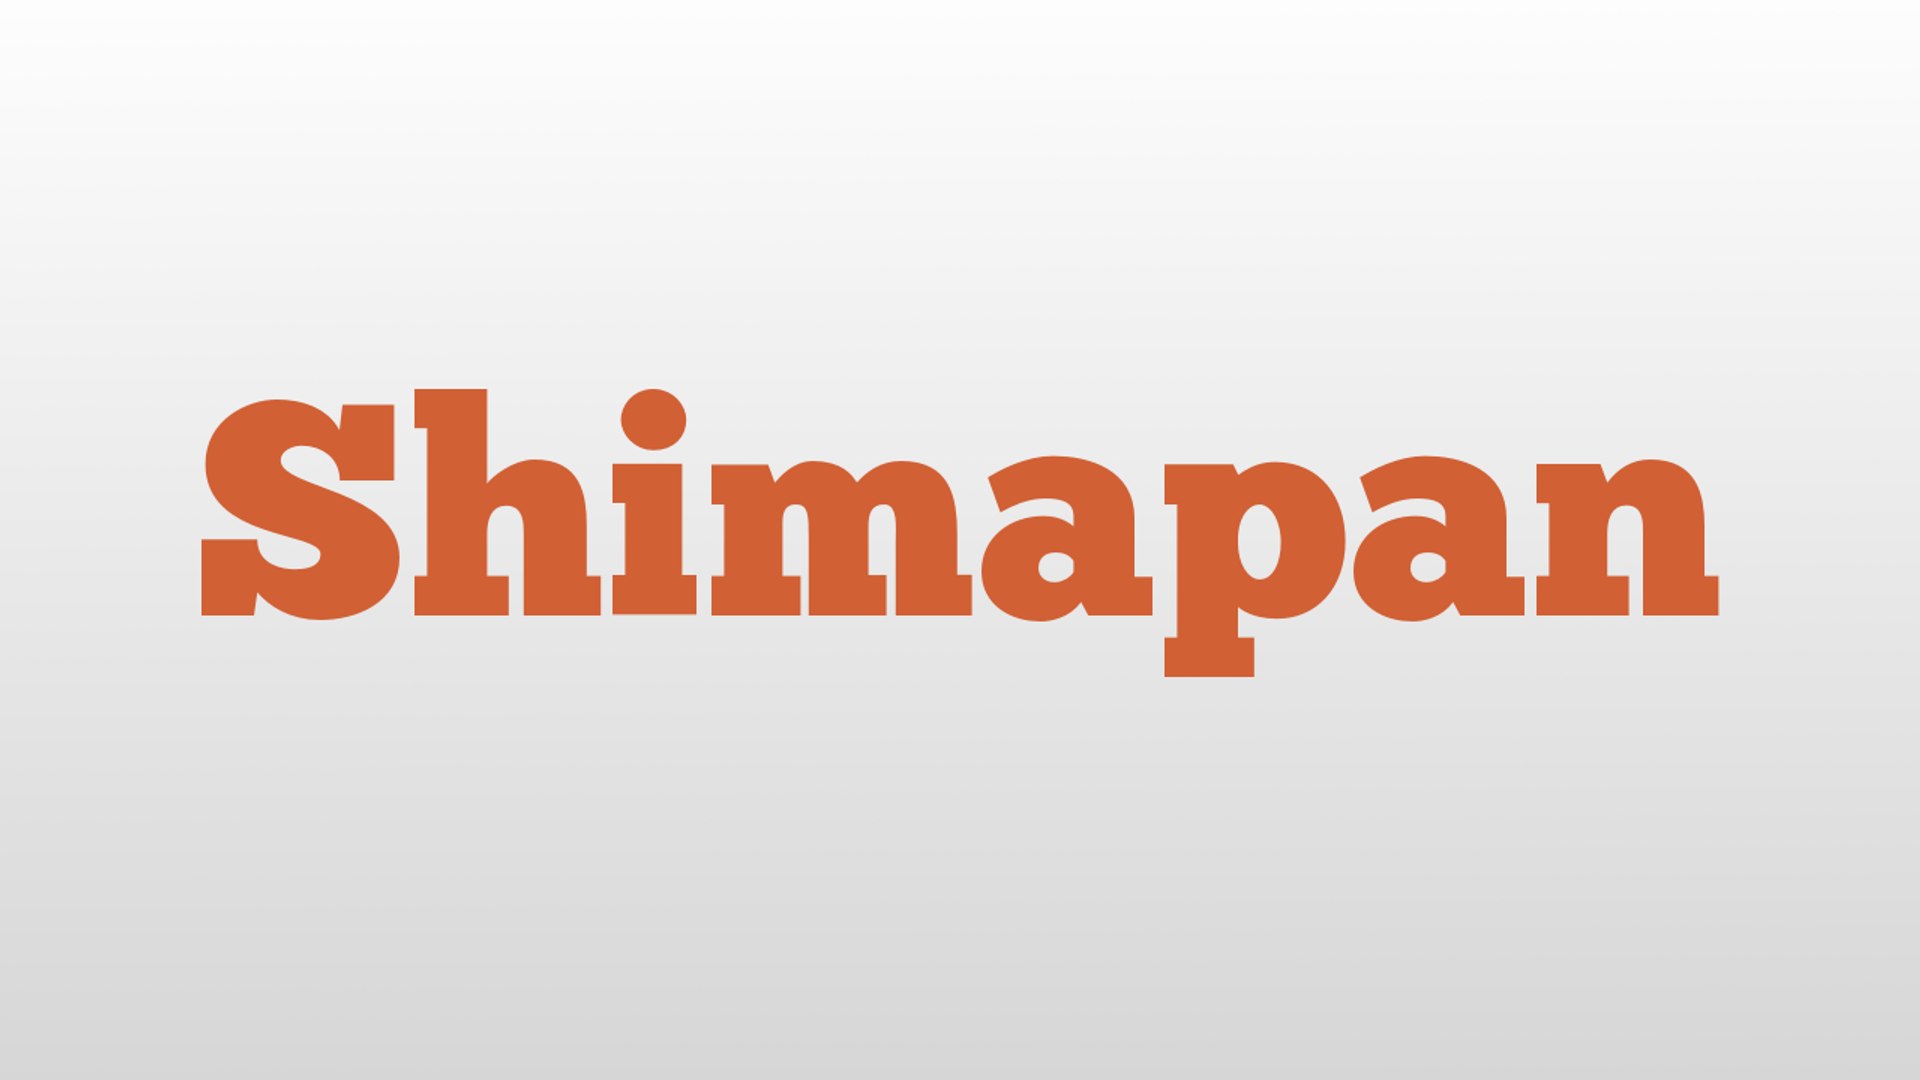 Shimapan meaning